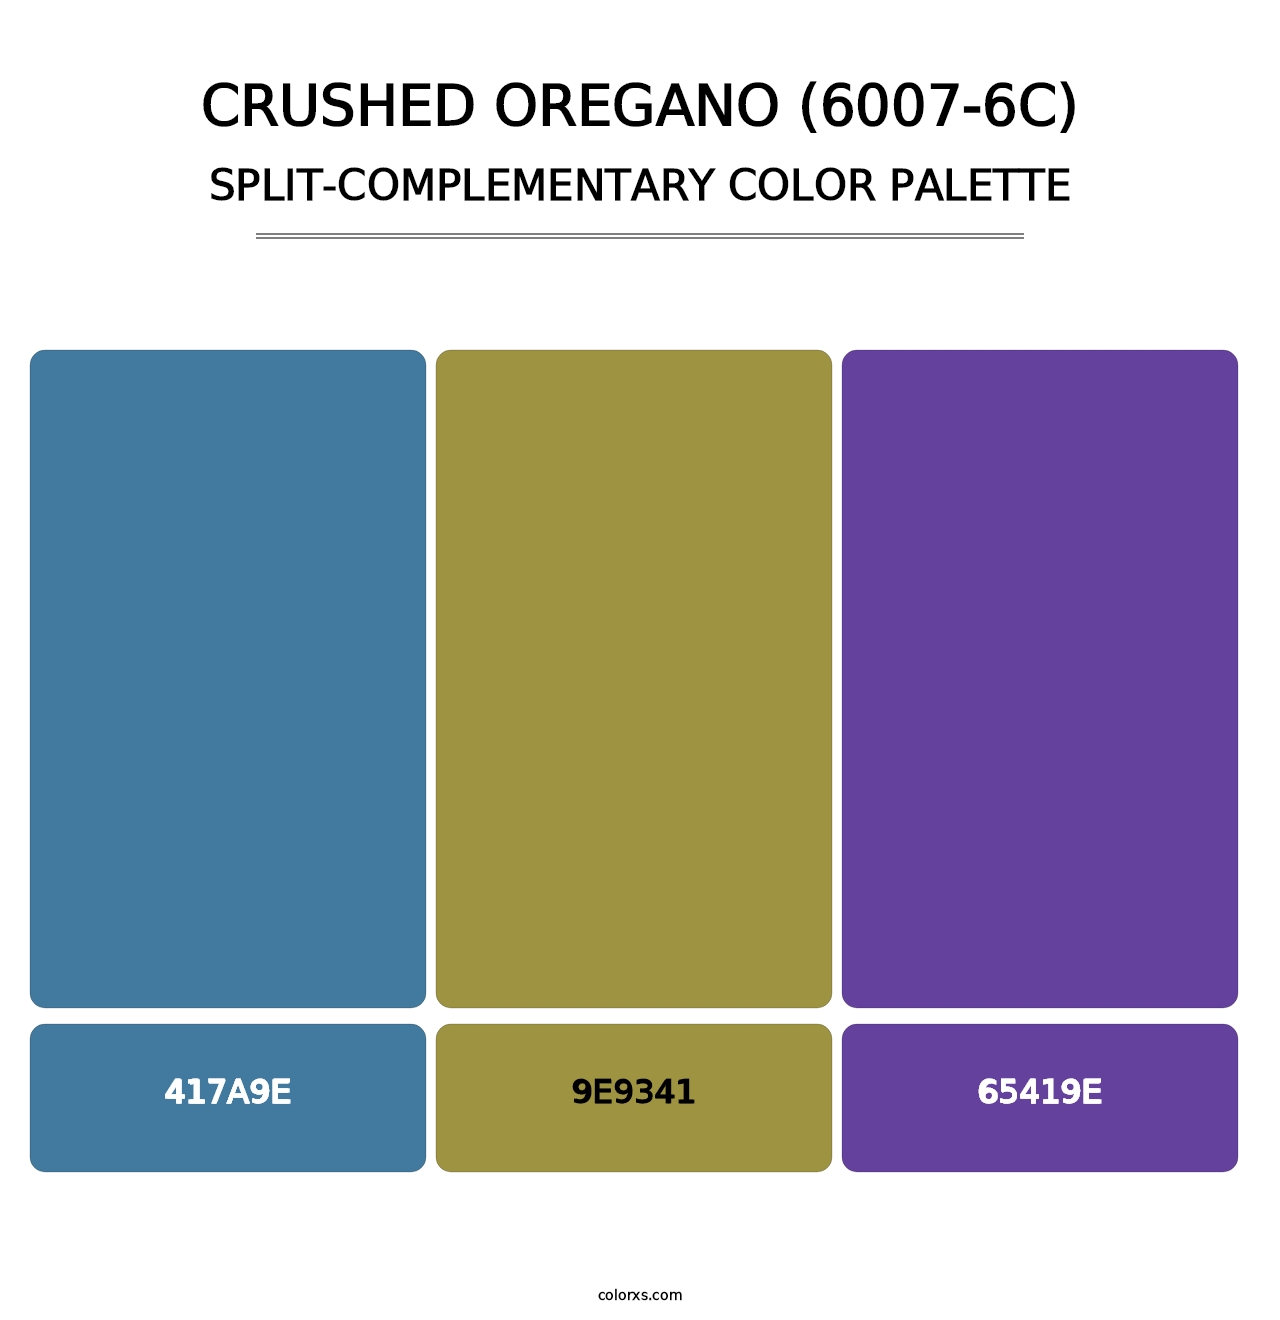 Crushed Oregano (6007-6C) - Split-Complementary Color Palette